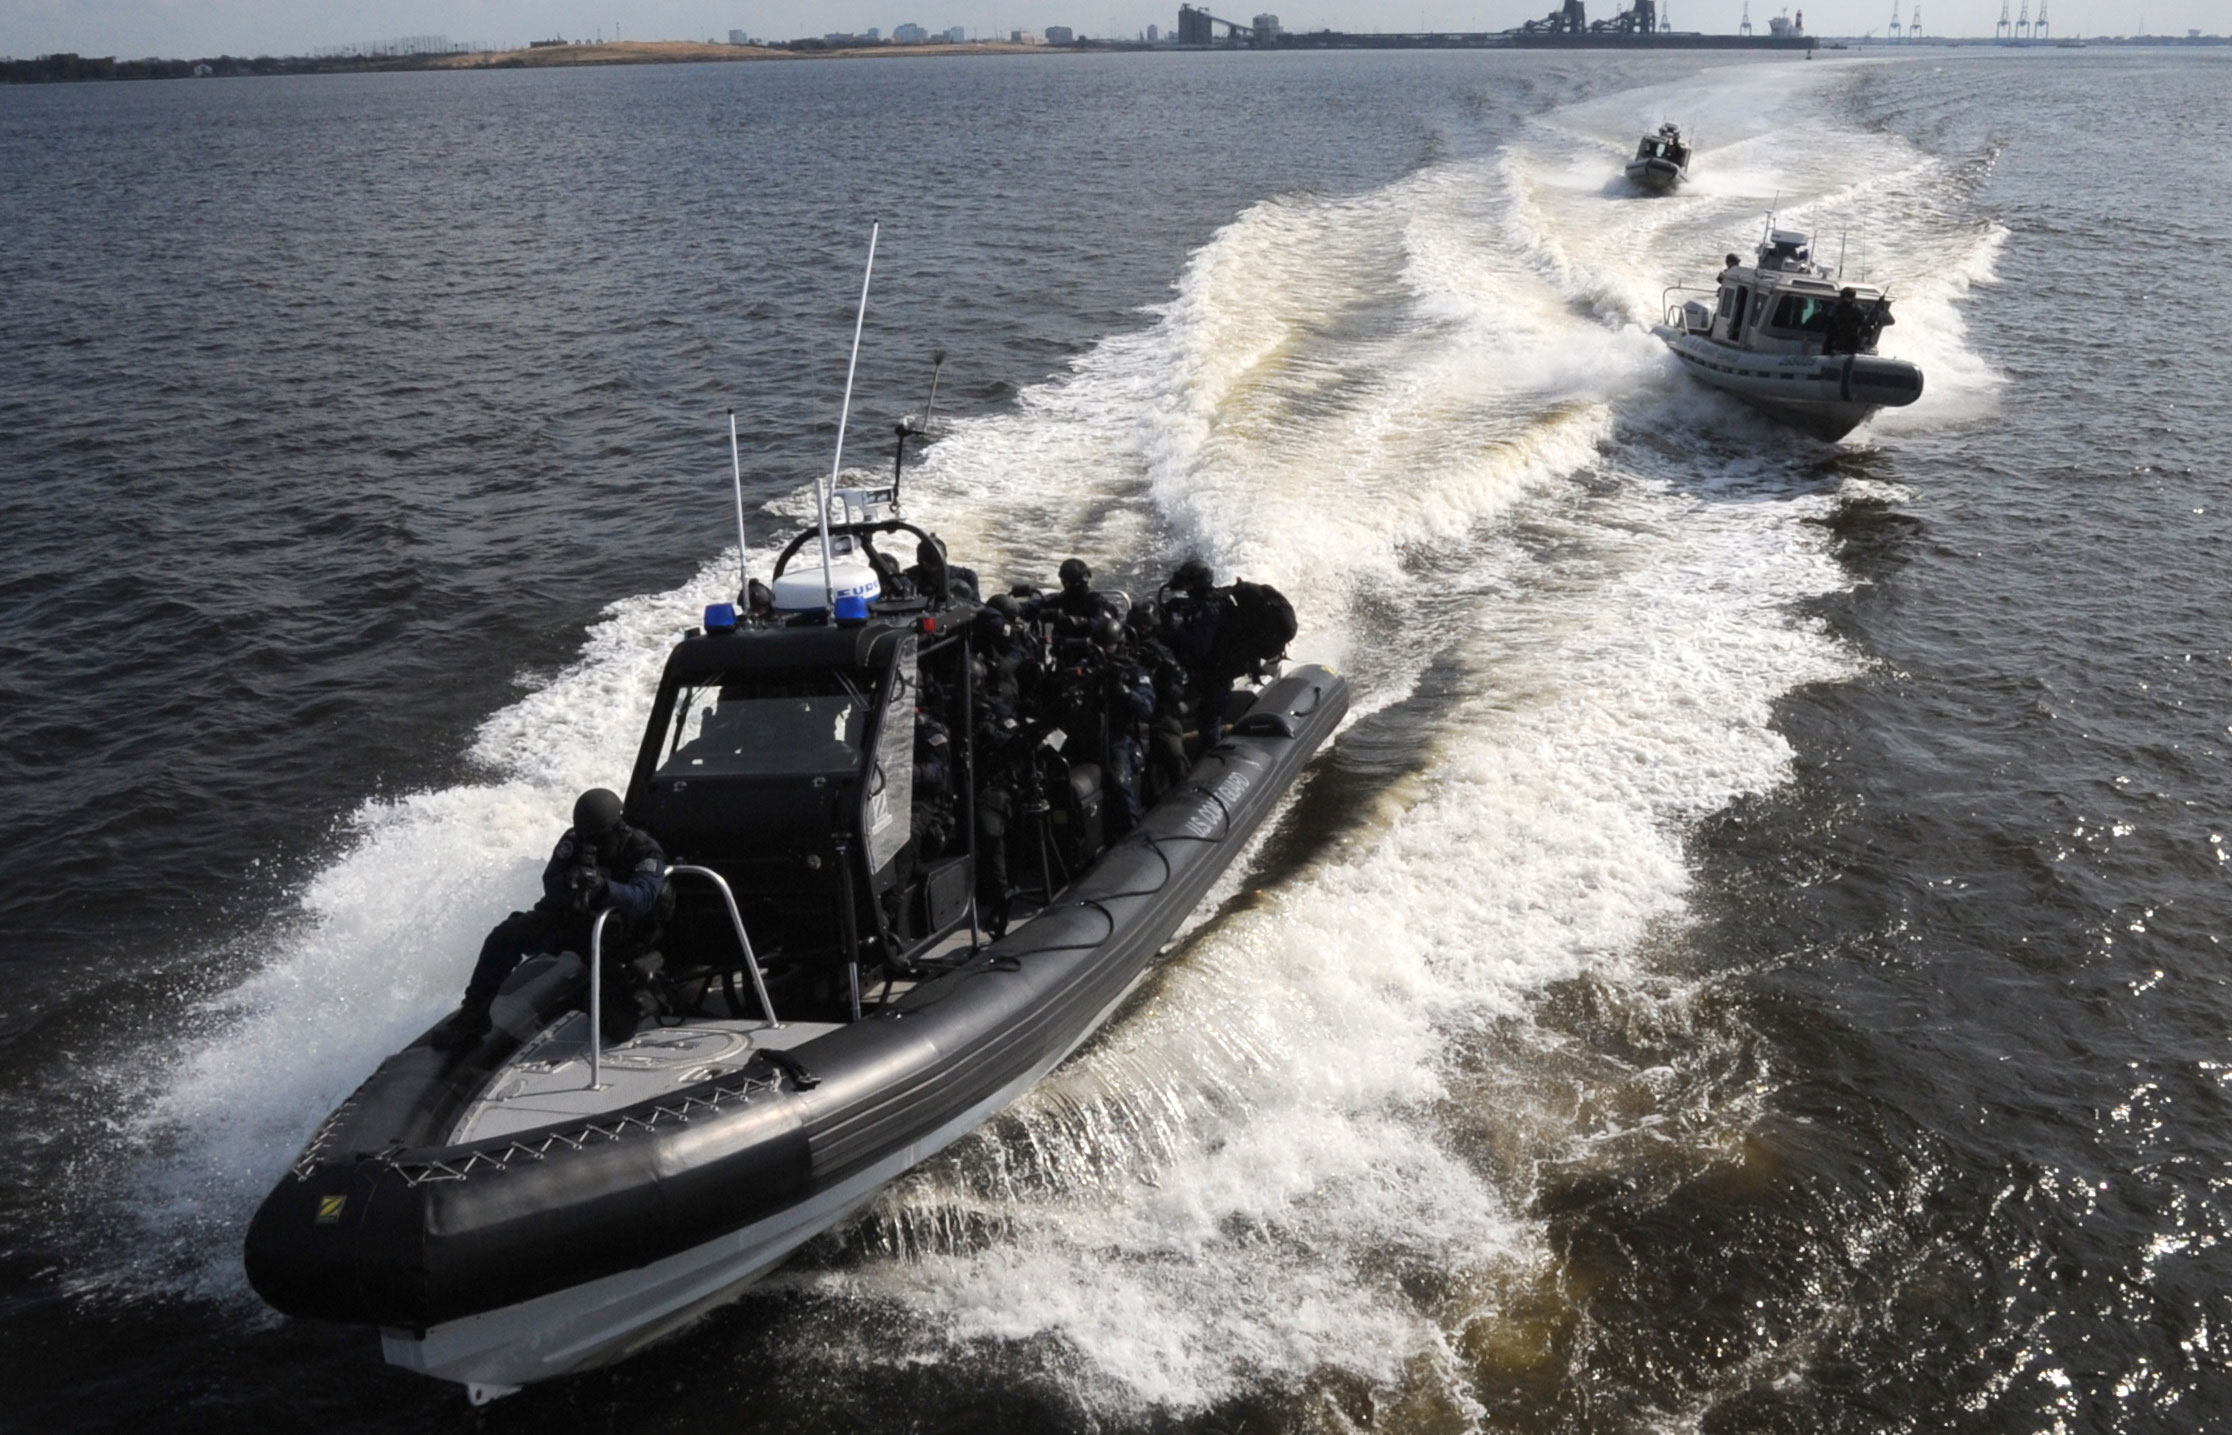 Maritime Security Response Teams